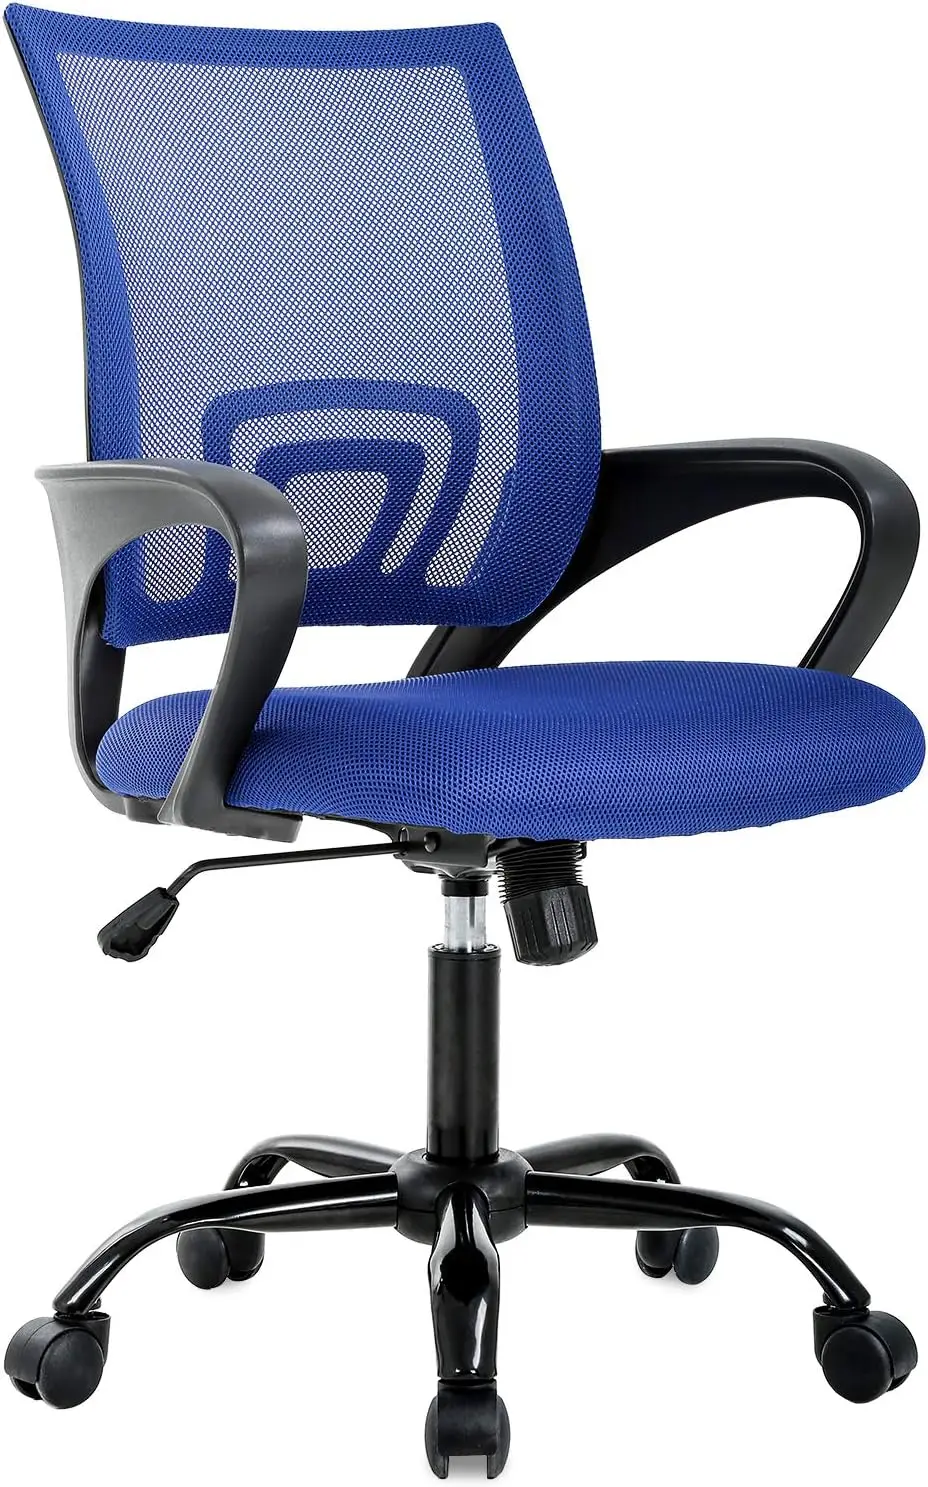 ergonomic-cheap-desk-chair-mesh-computer-chair-lumbar-support-modern-executive-adjustable-stool-rolling-swivel-chair-blue